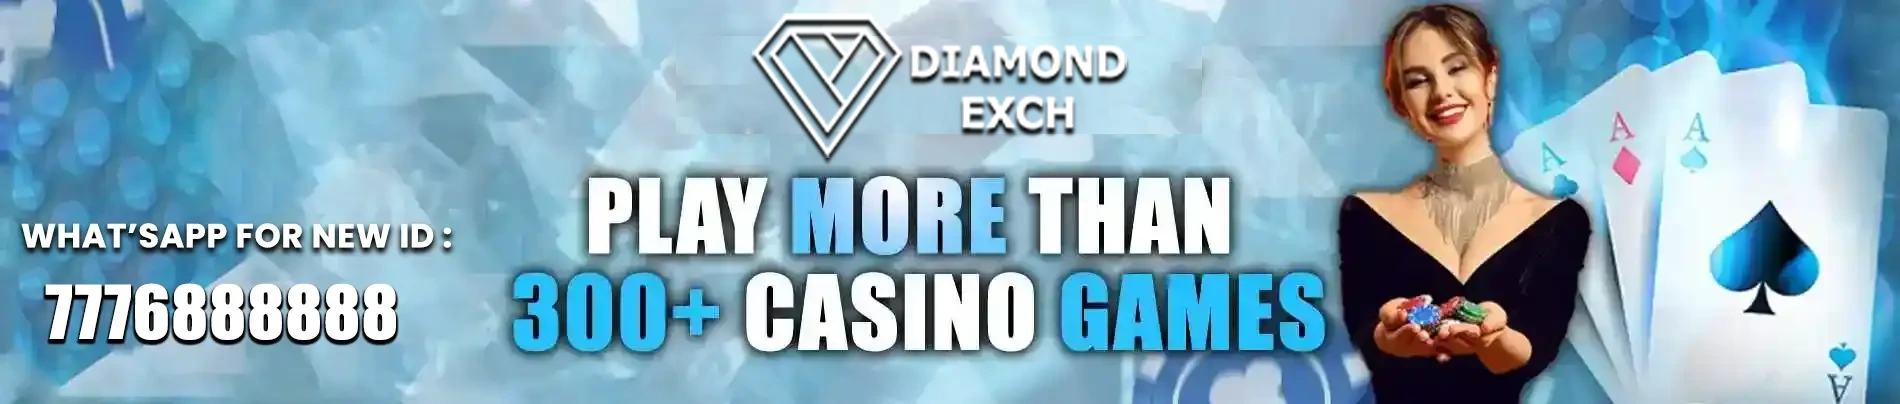 more than 300+ Casino games